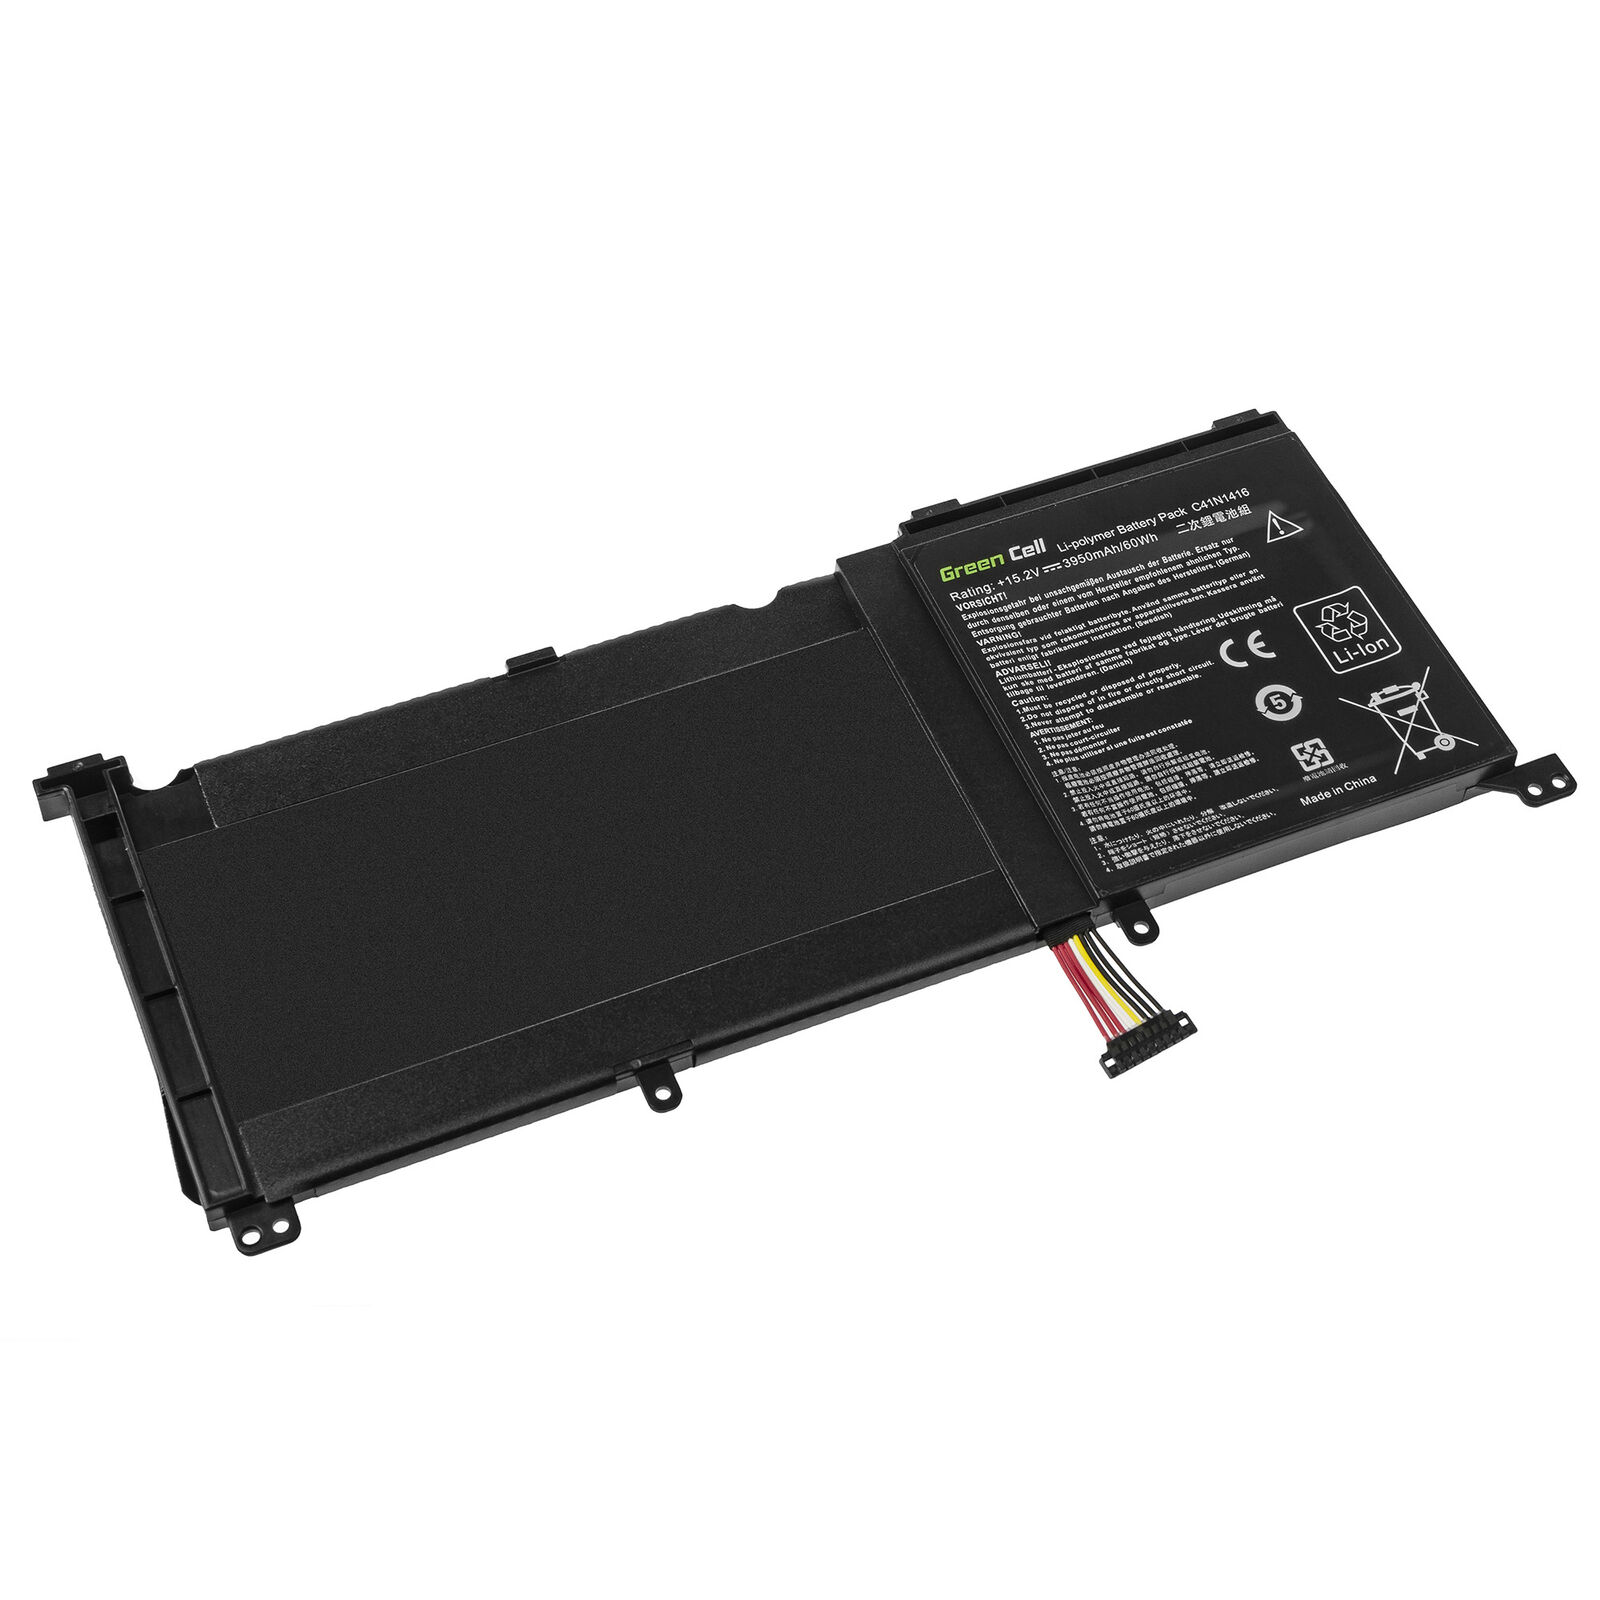 C41N1416 Asus ZenBook Pro G501 G501J G501VW N501L UX501J 3950mAh compatible battery